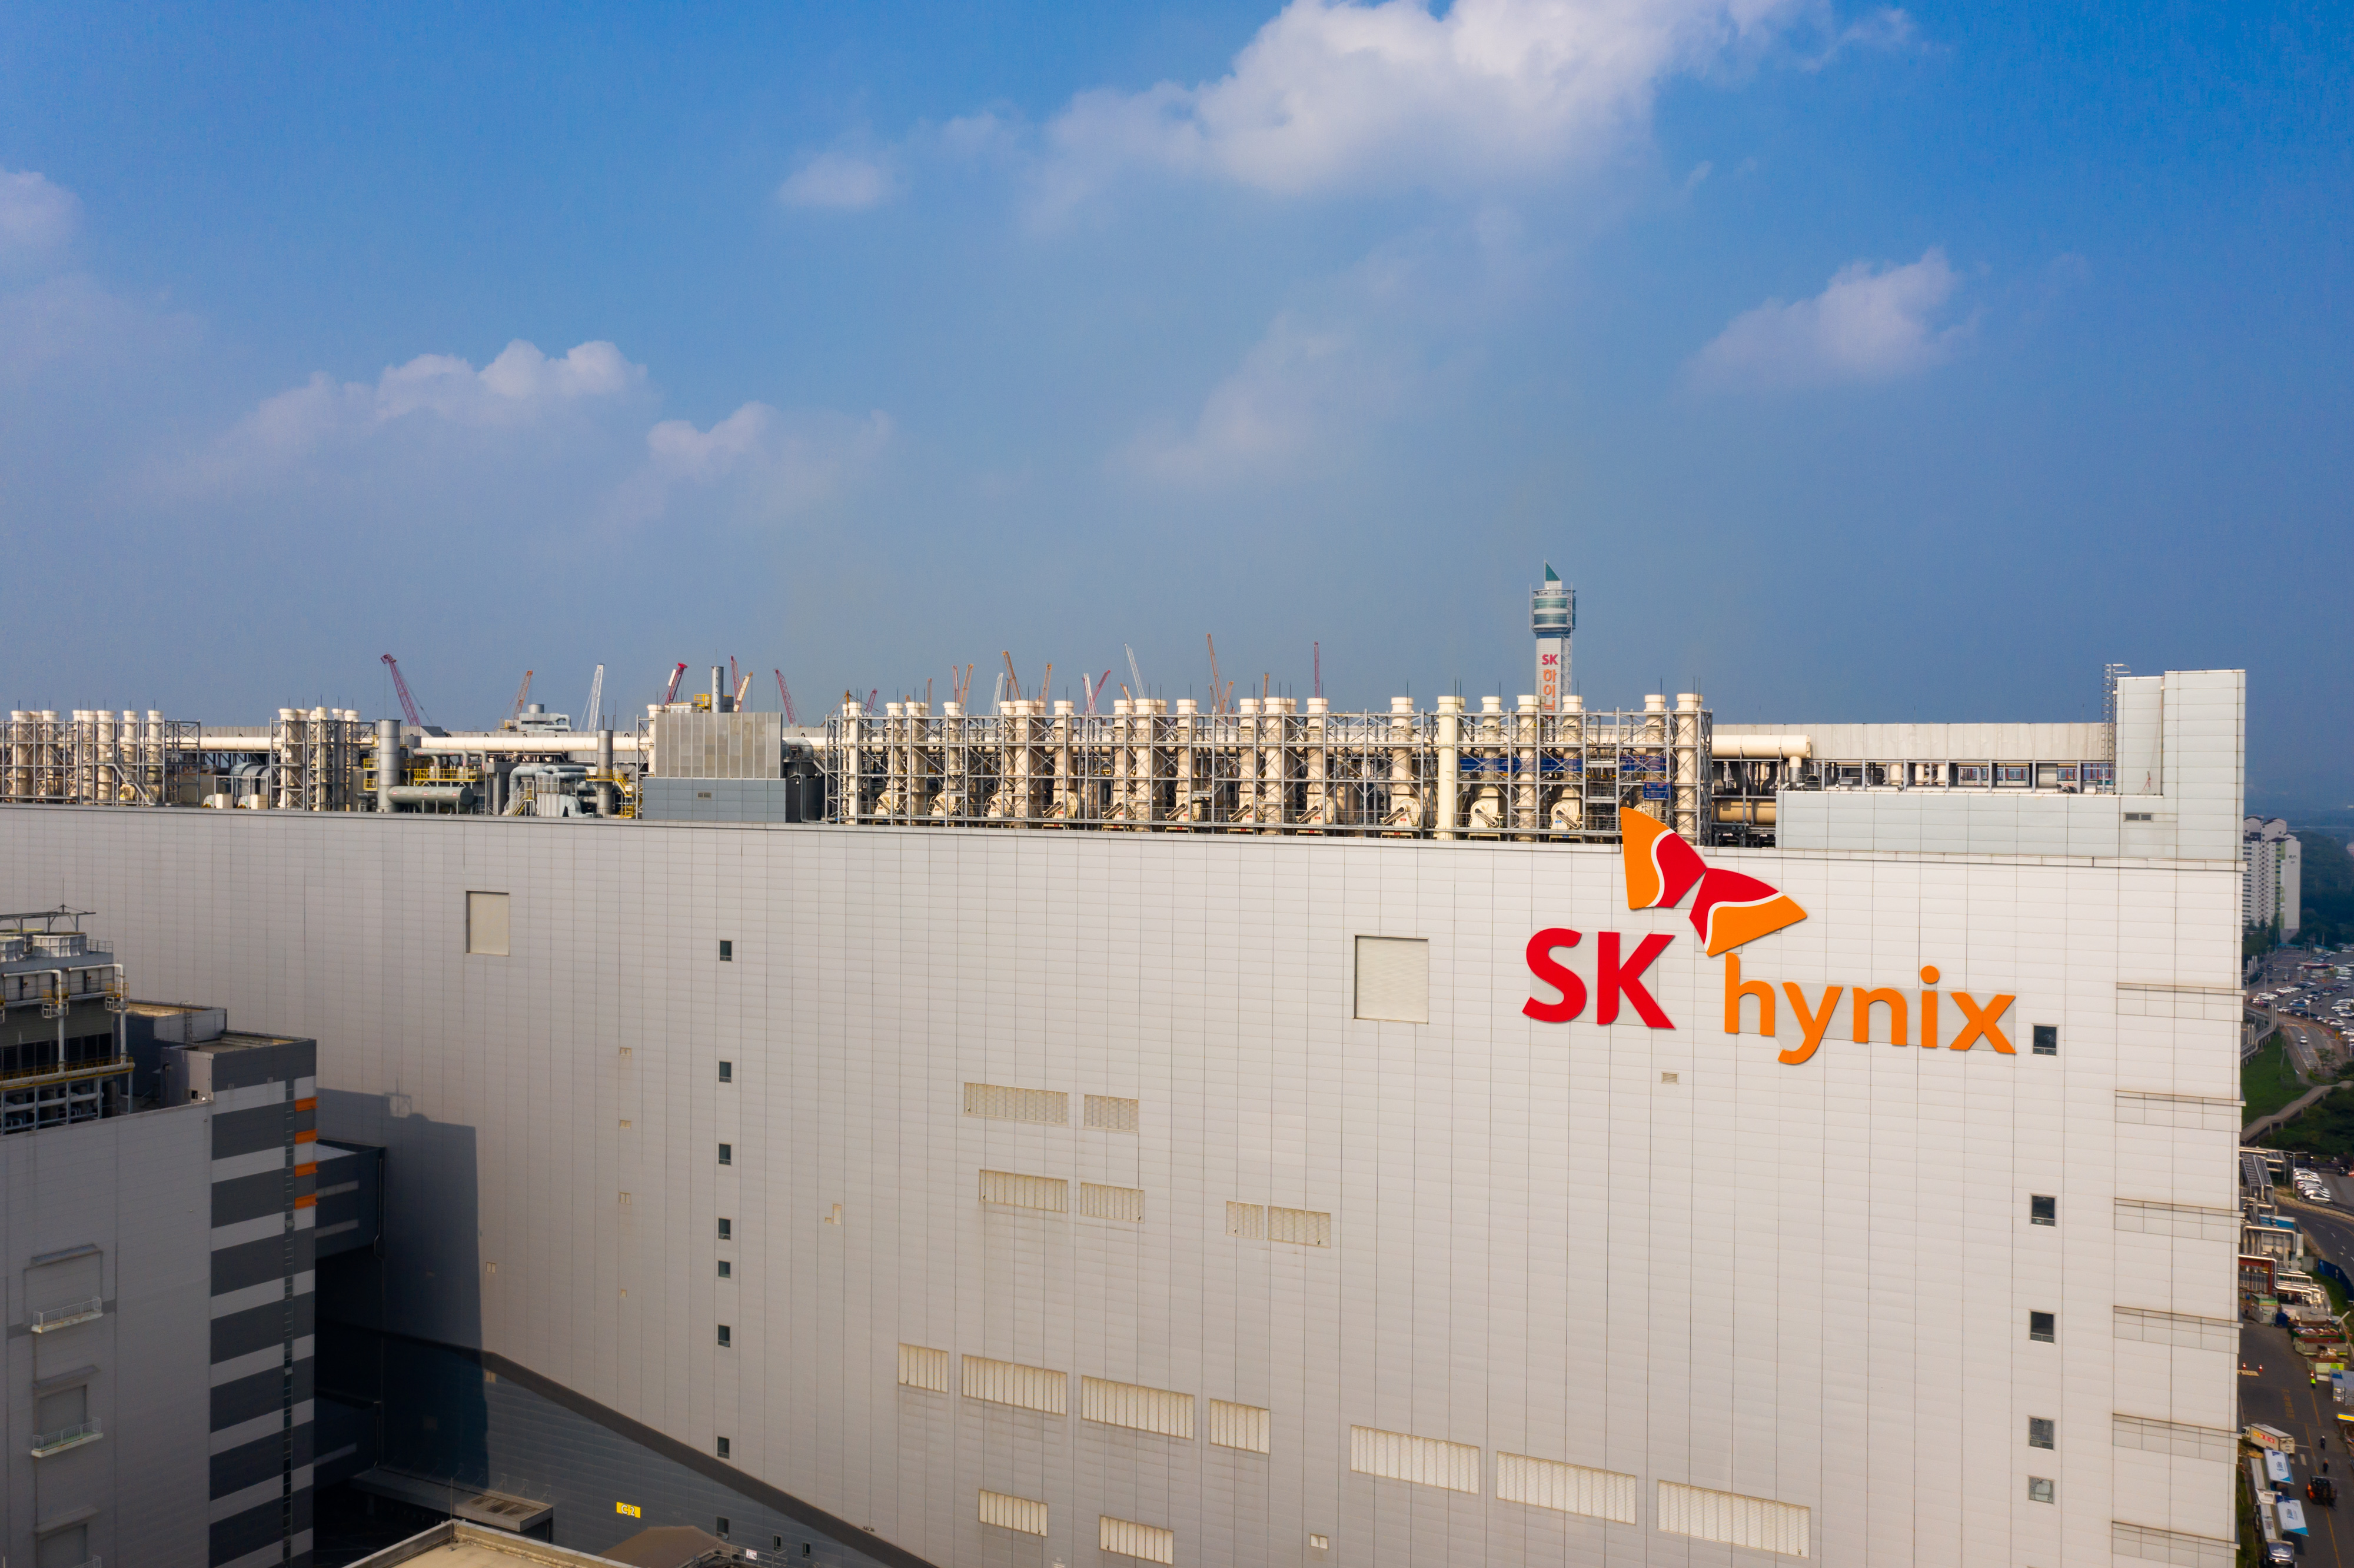 SK Hynix Inc.’s M14 semiconductor plant in Icheon, South Korea. Photo: VCG